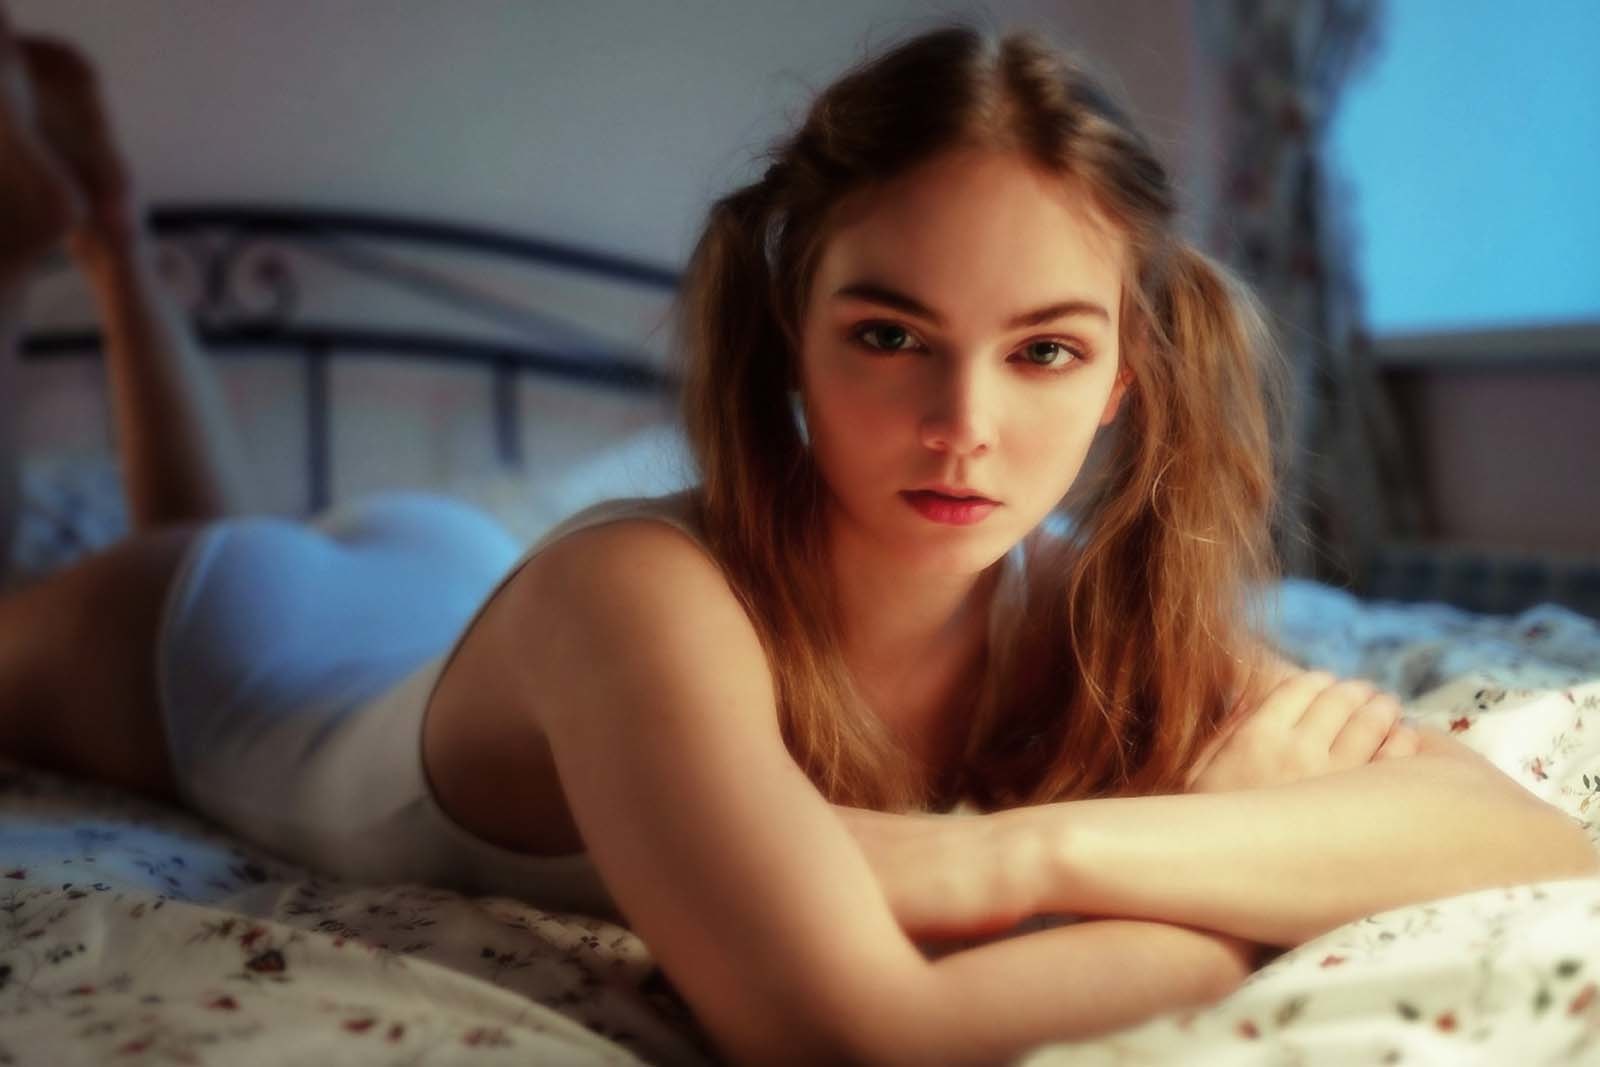 Russian Model Girl Image